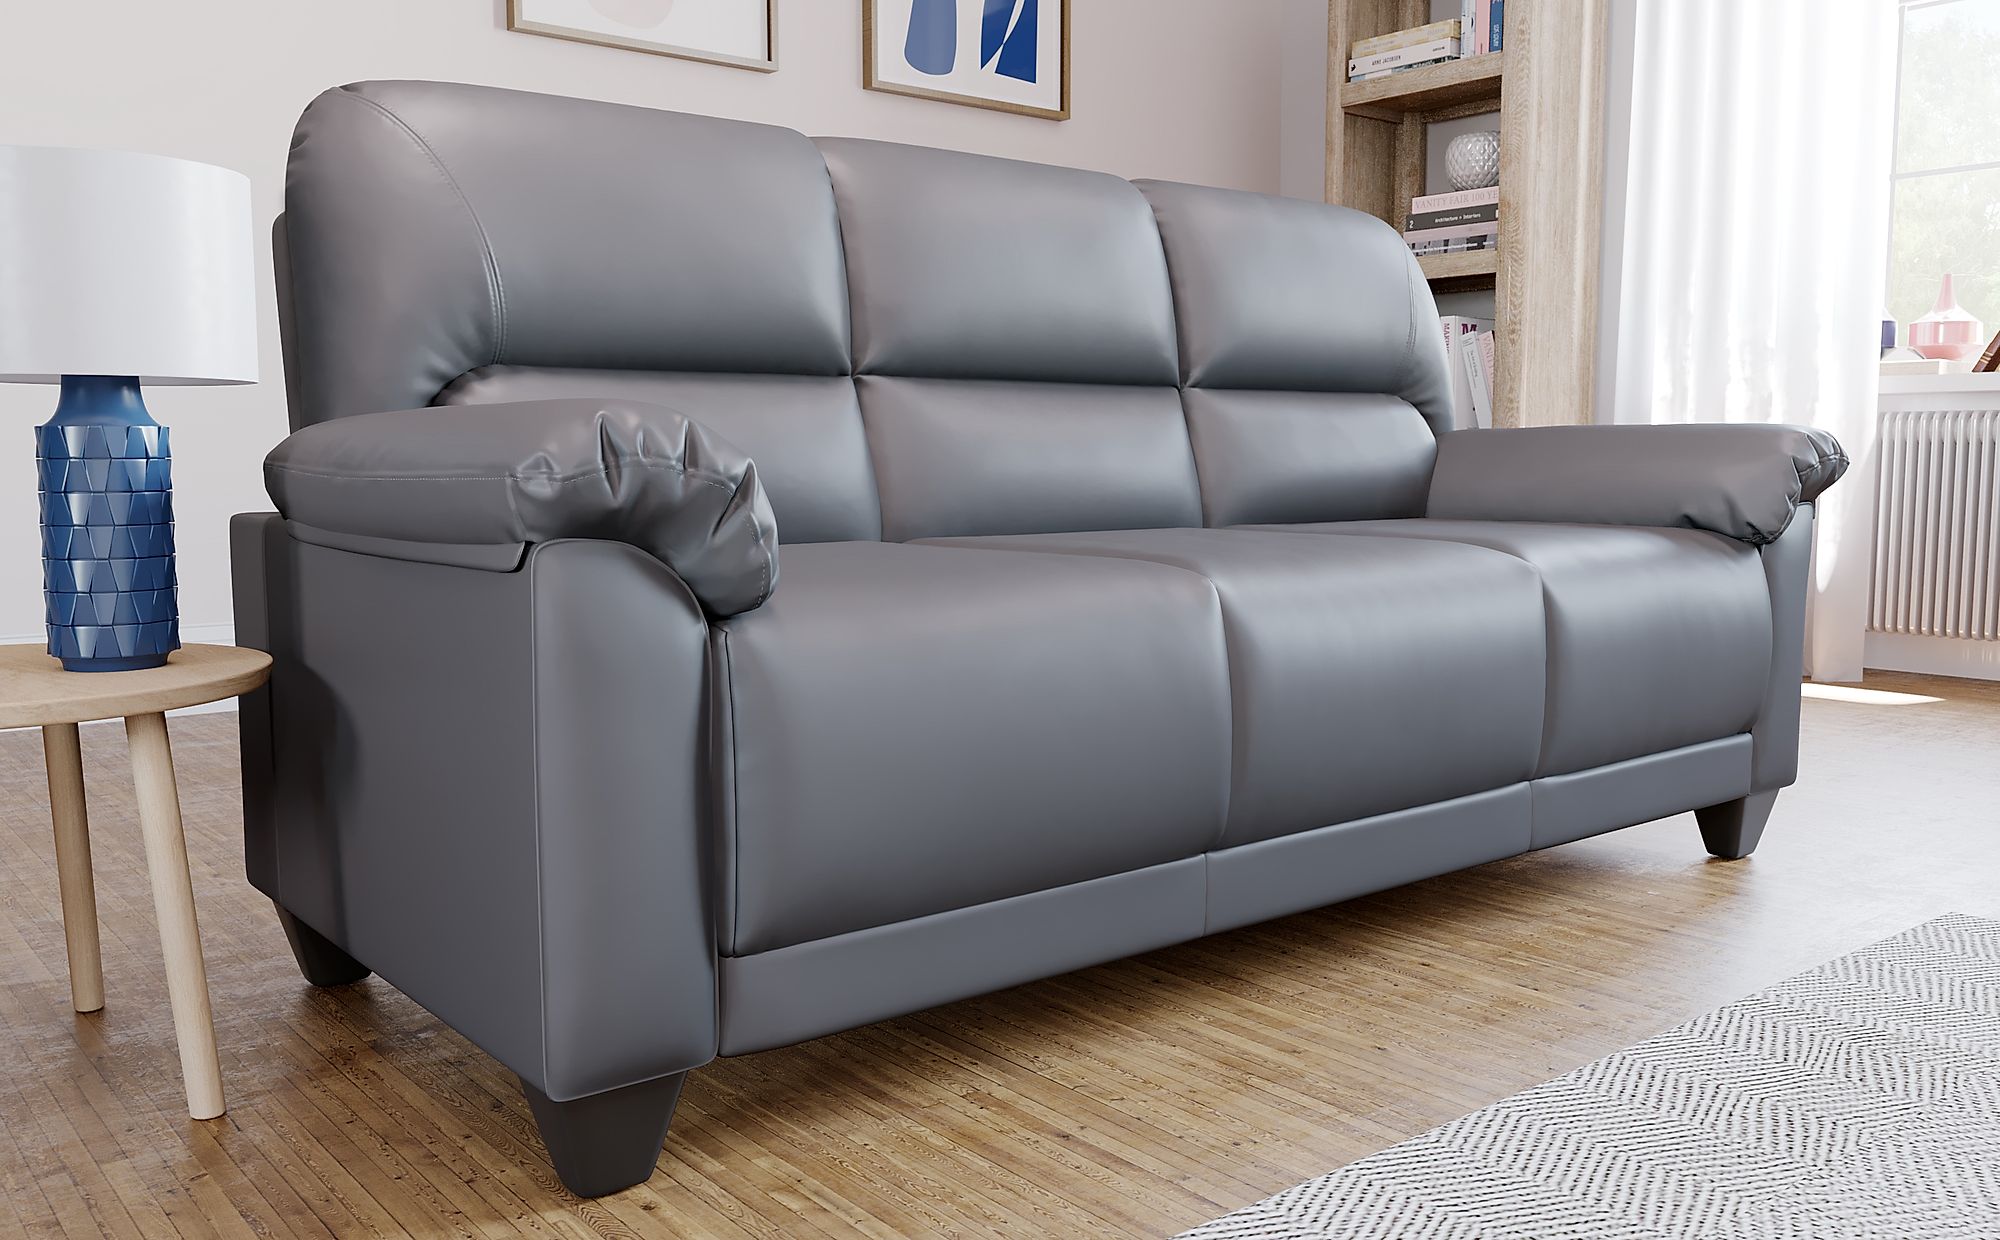 Kenton Small Grey Leather 3 Seater Sofa Furniture Choice